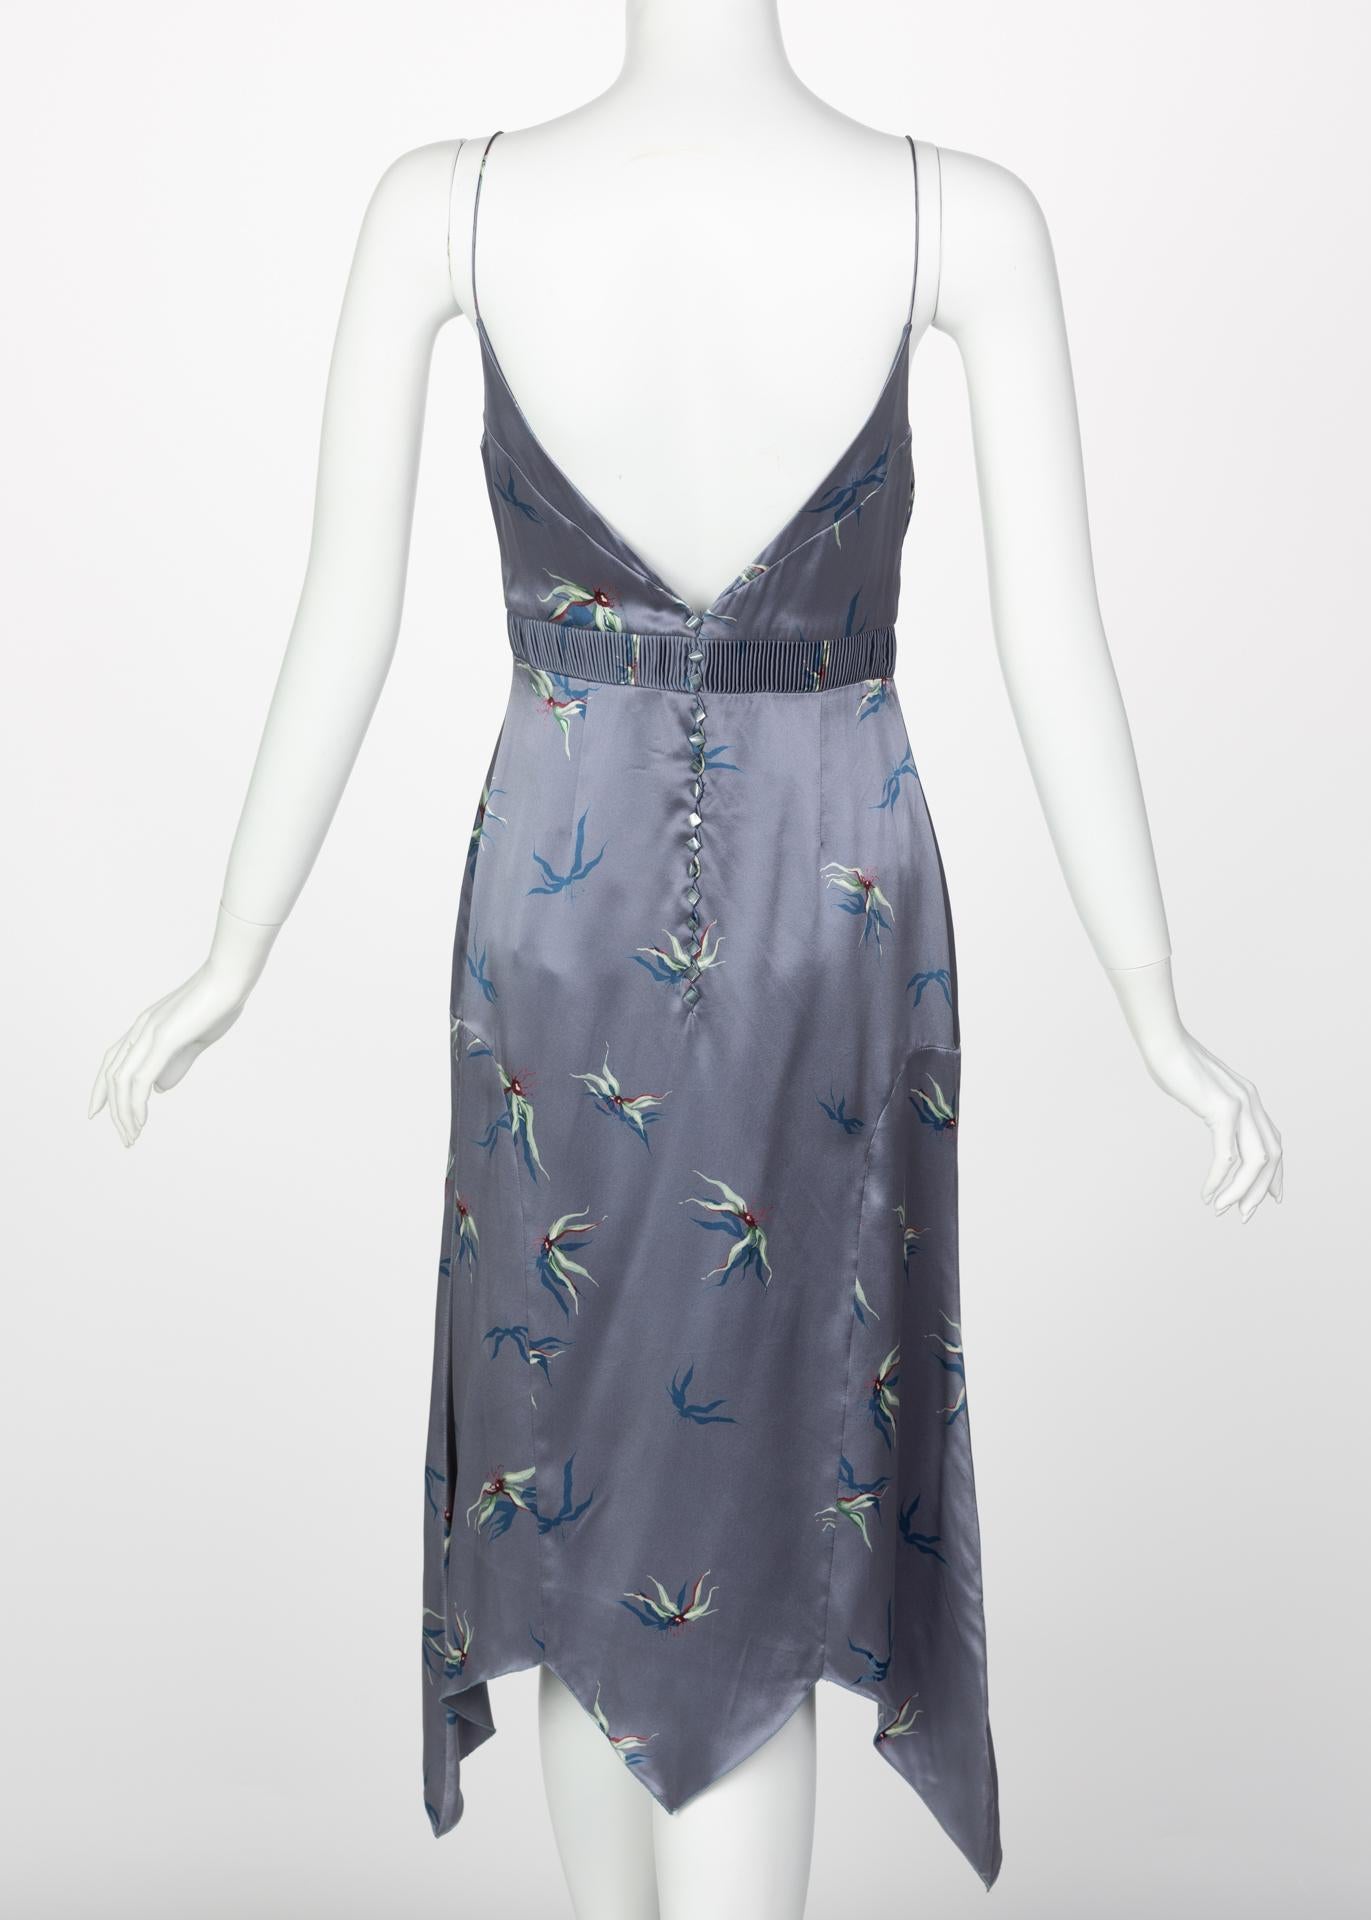 Gray Chloé Stella McCartney Silk Slip Dress Shawl Set , 1990s